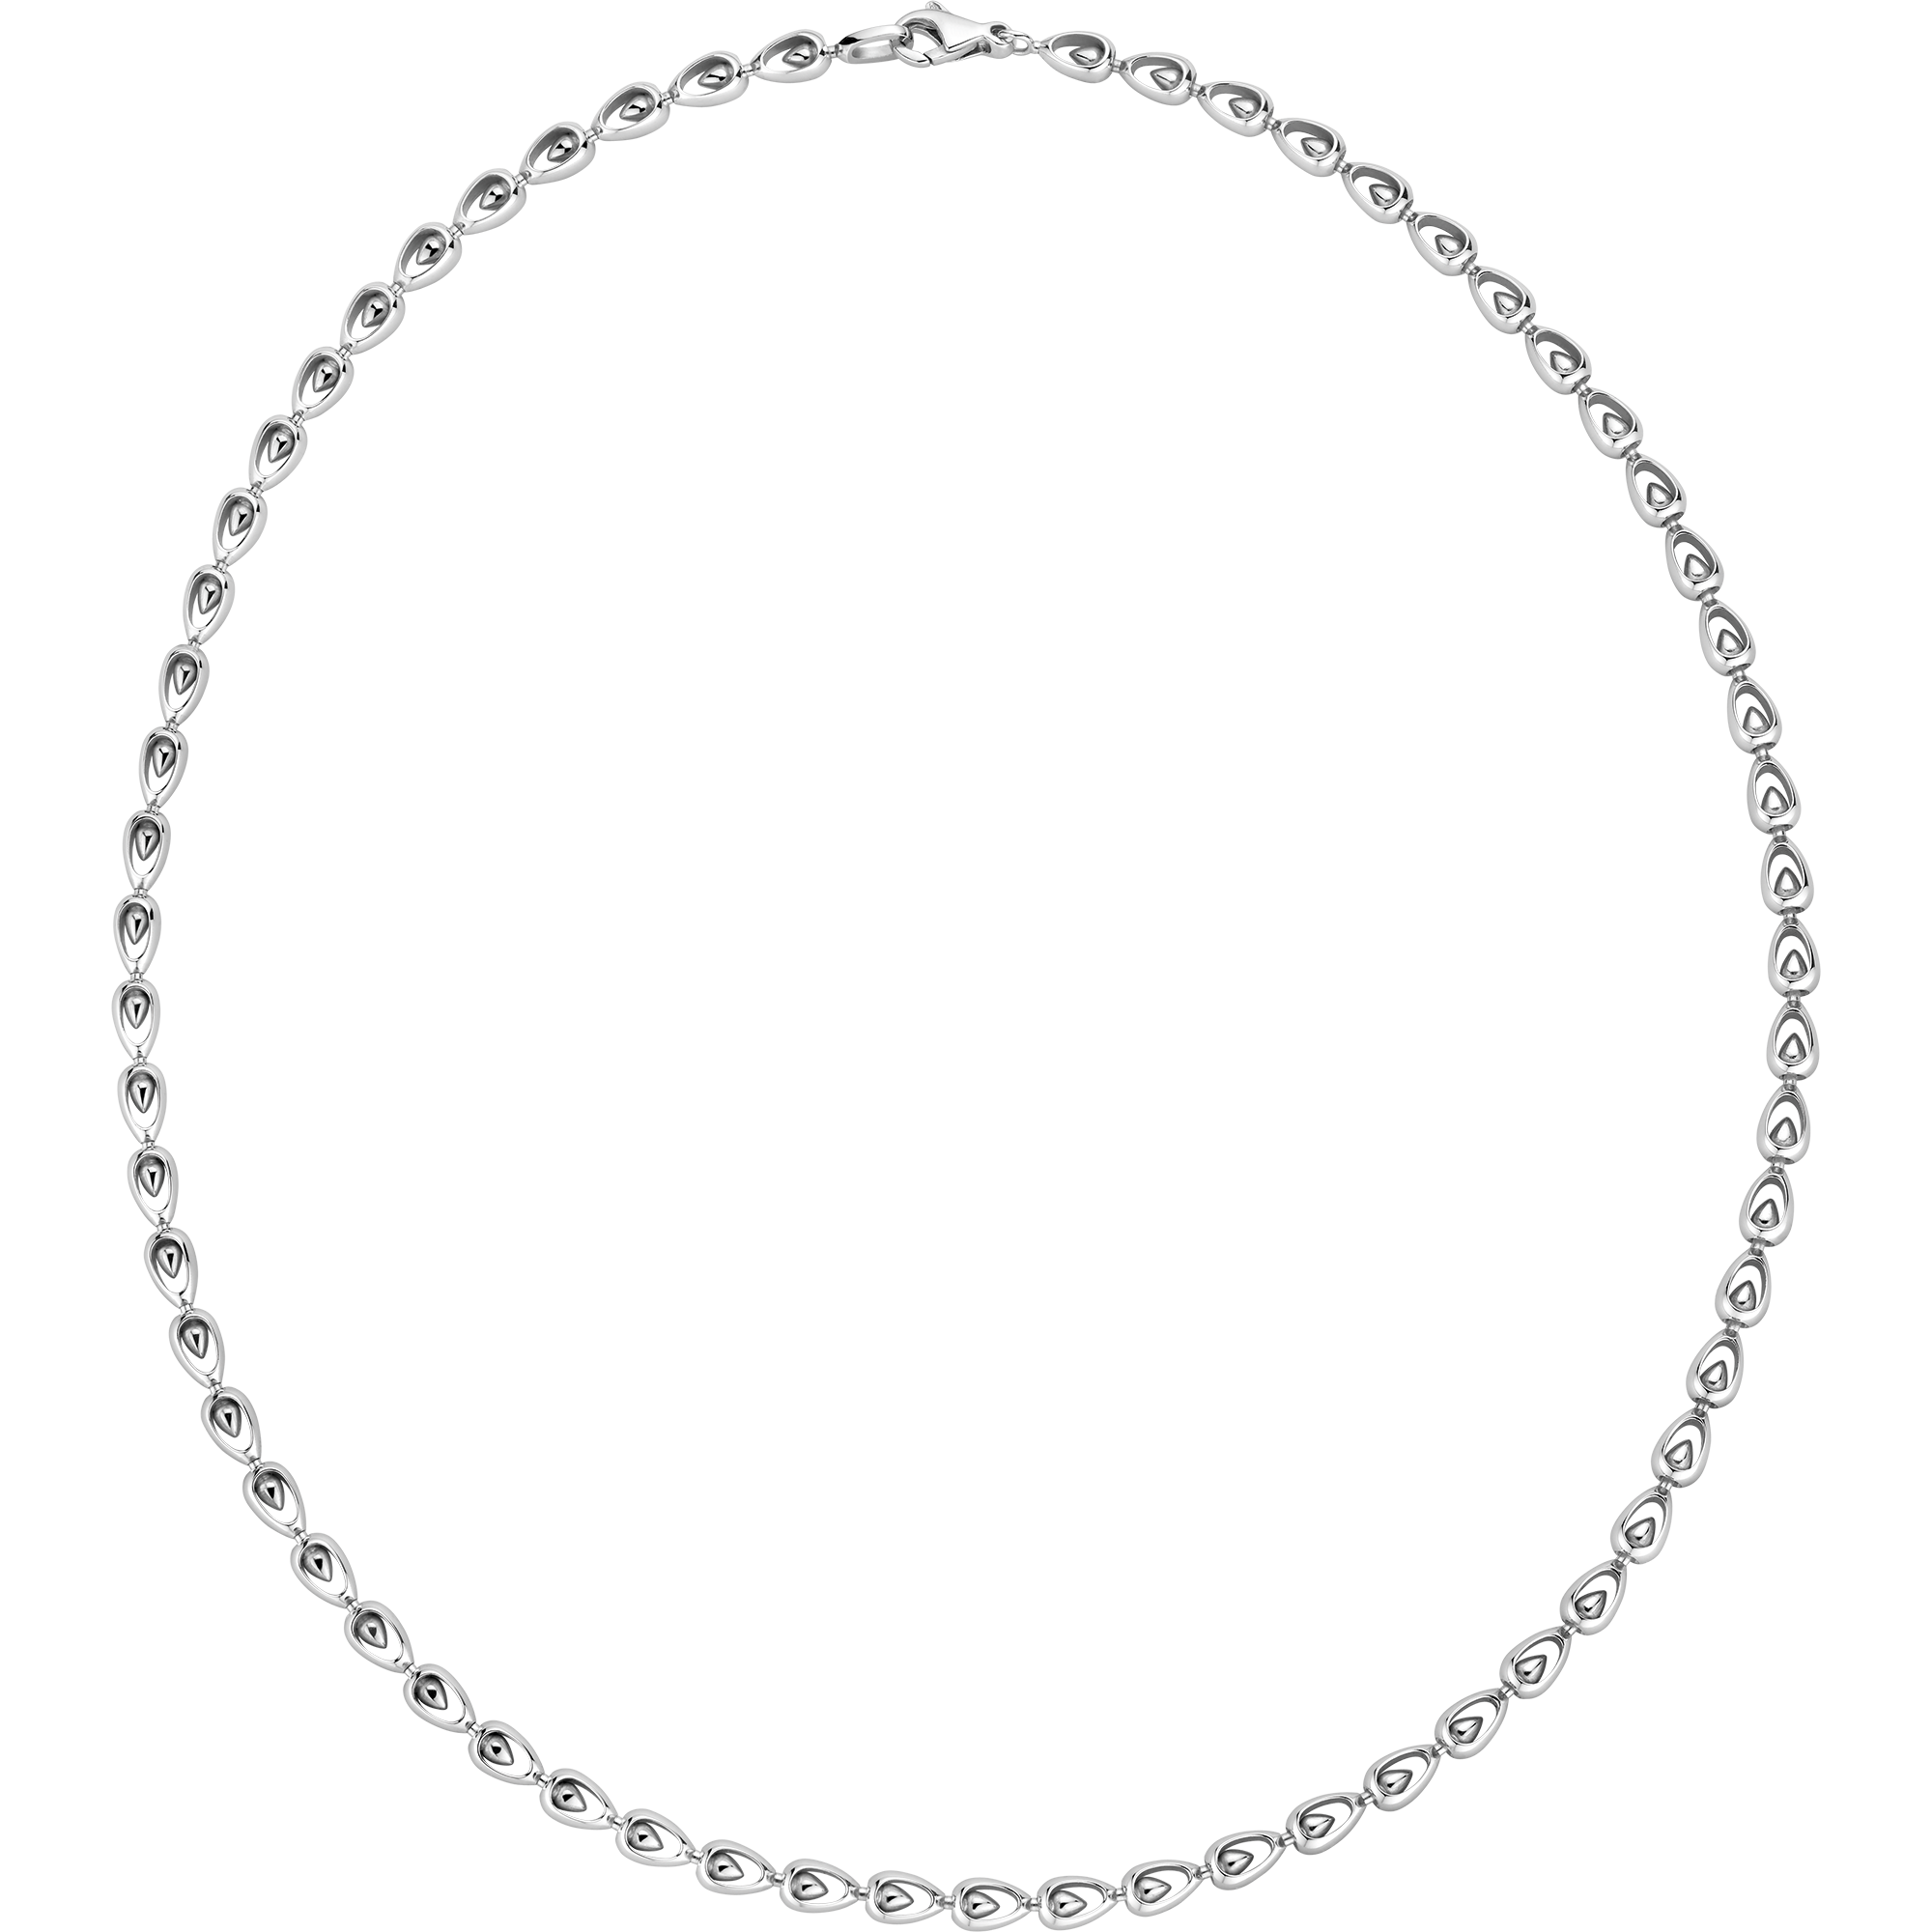 Omega Dewdrop Collar, Oro blanco de 18 qt - N602BC0000105